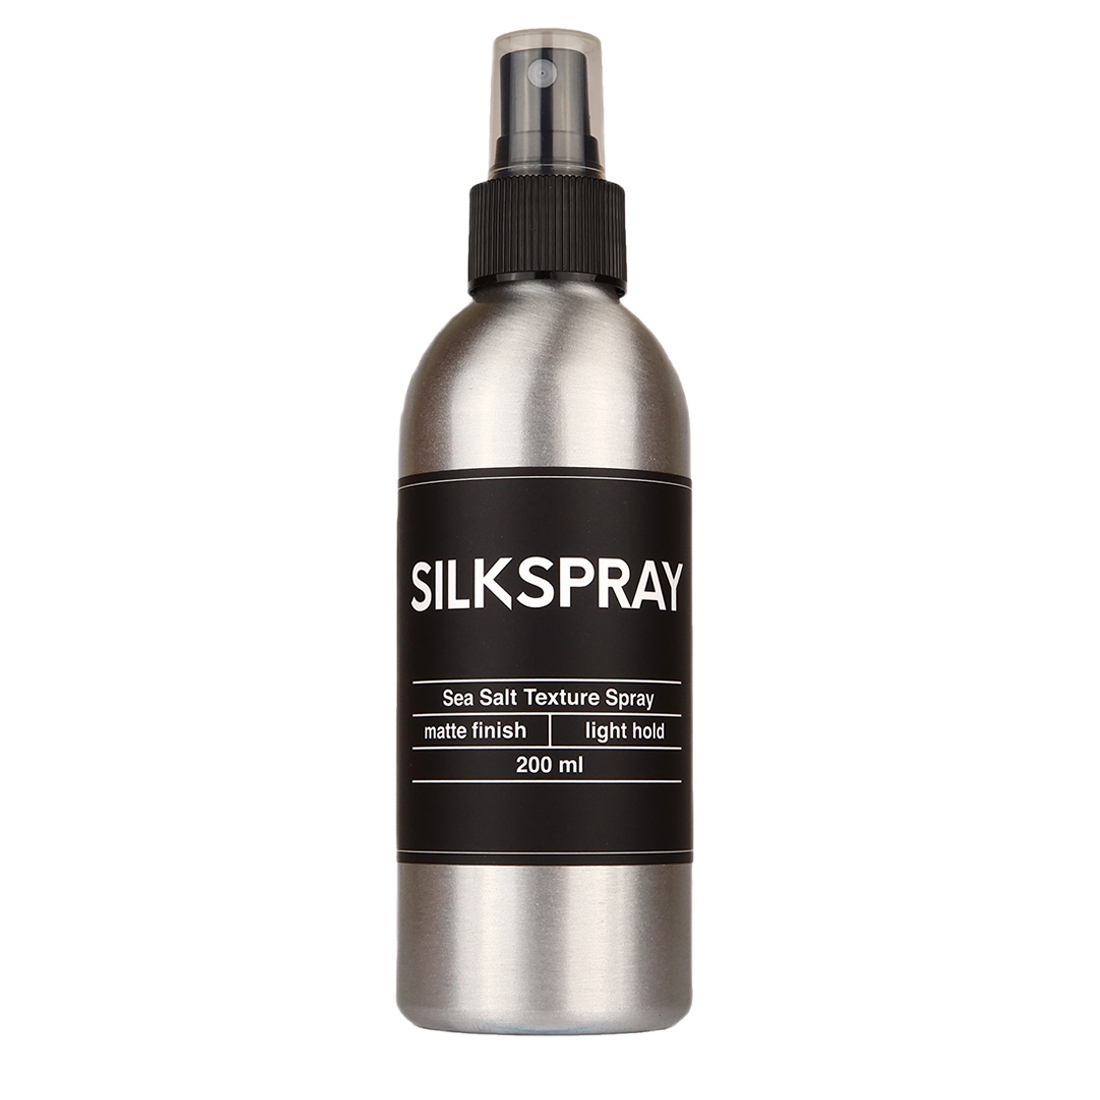 Лак для волос с морской солью Silkclay Silkspray, 200 мл спрей с морской солью и текстурирующий спрей для волос цитрусовый бриз 6 жидких унций 177 мл beauty by earth